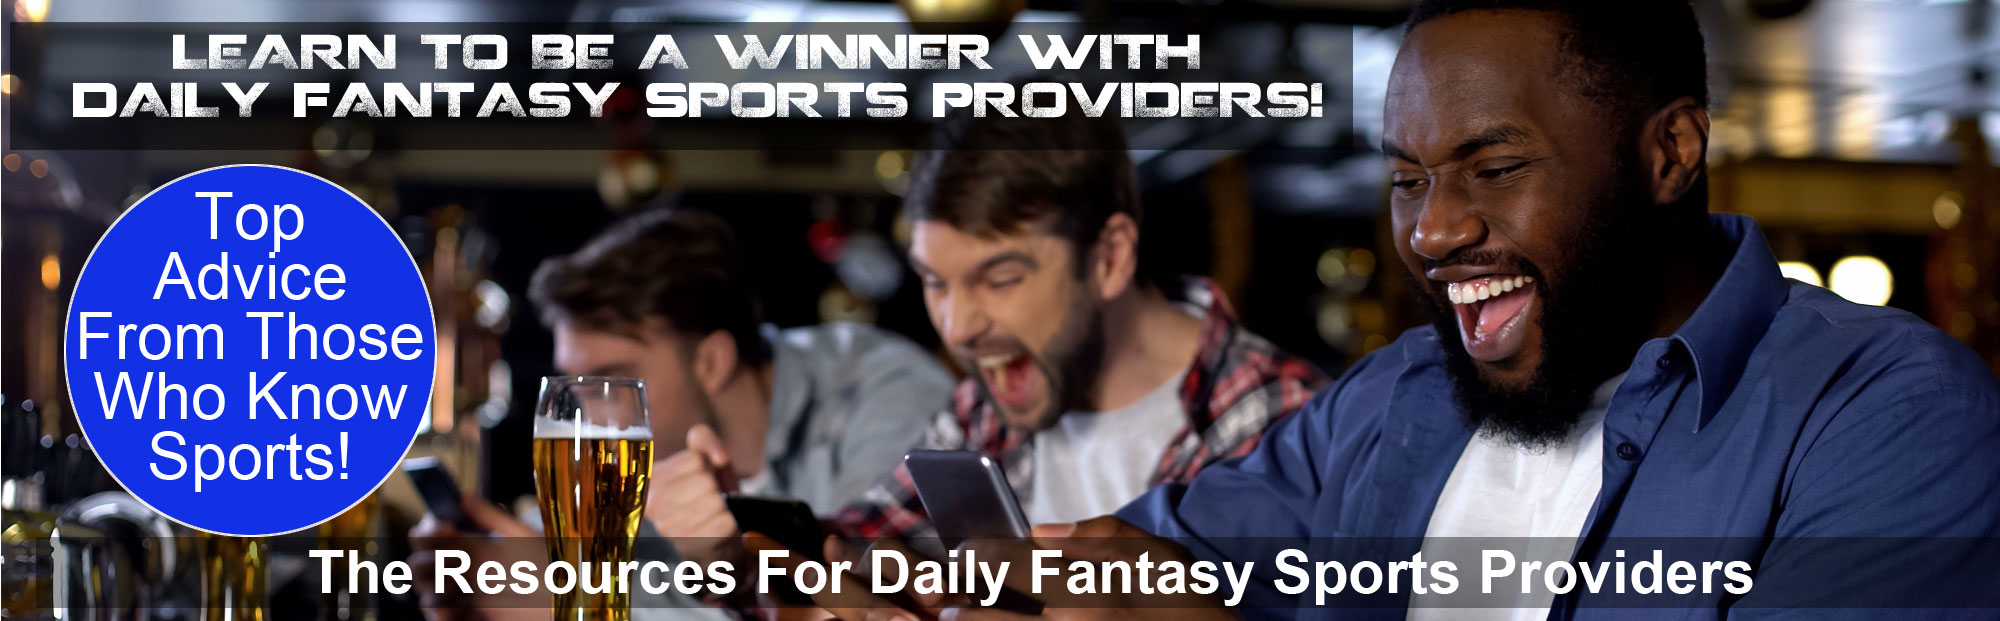 daily fantasy sports winners